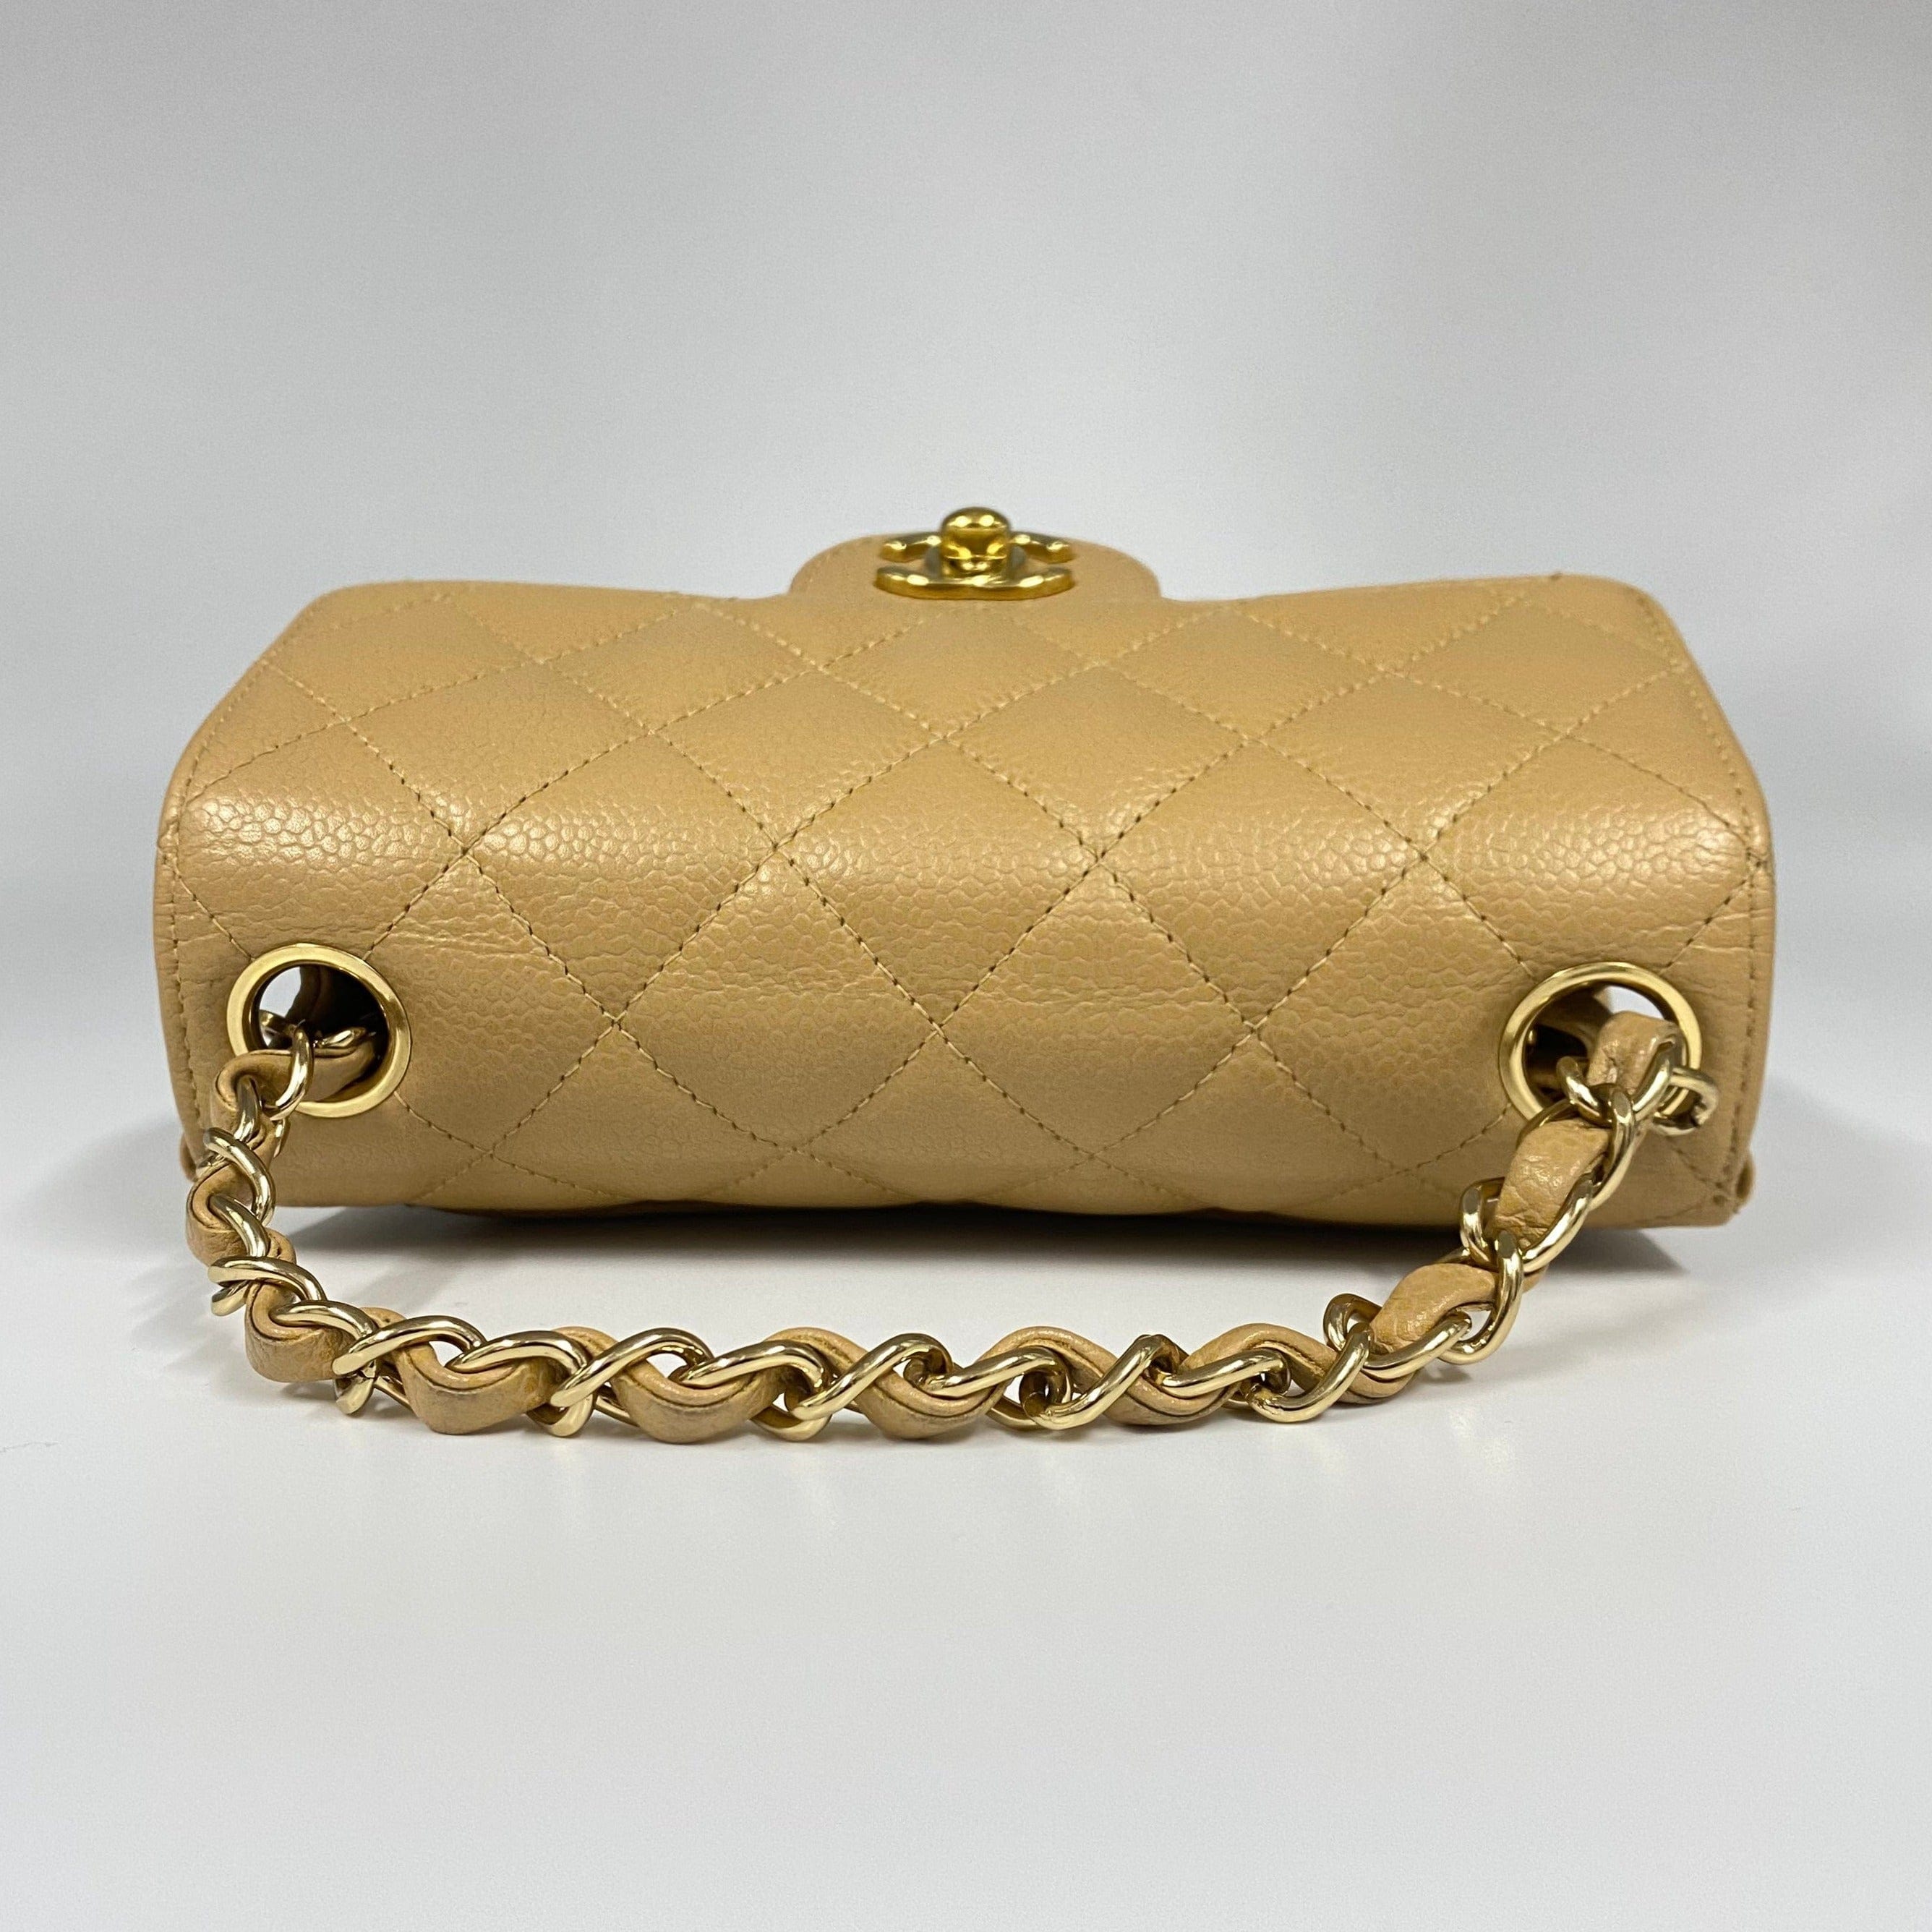 Chanel CHANEL VINTAGE MINI SQUARE 17 CHAIN SHOULDER BAG BEIGE CAVIAR SKIN 90215426